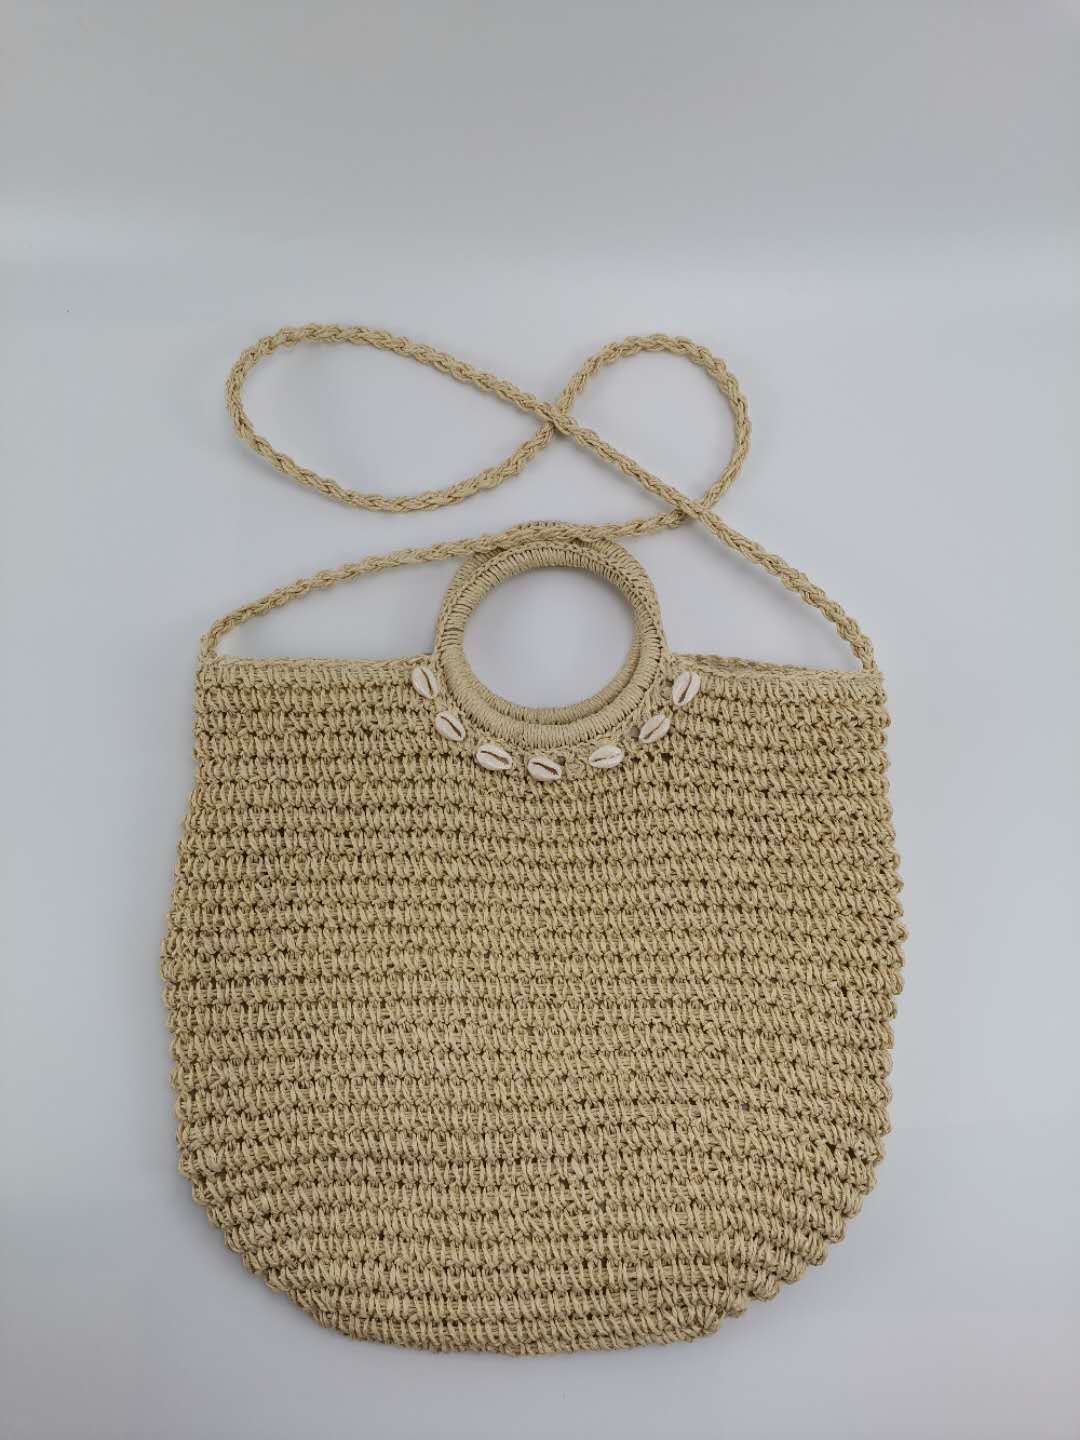 paper crochet bag